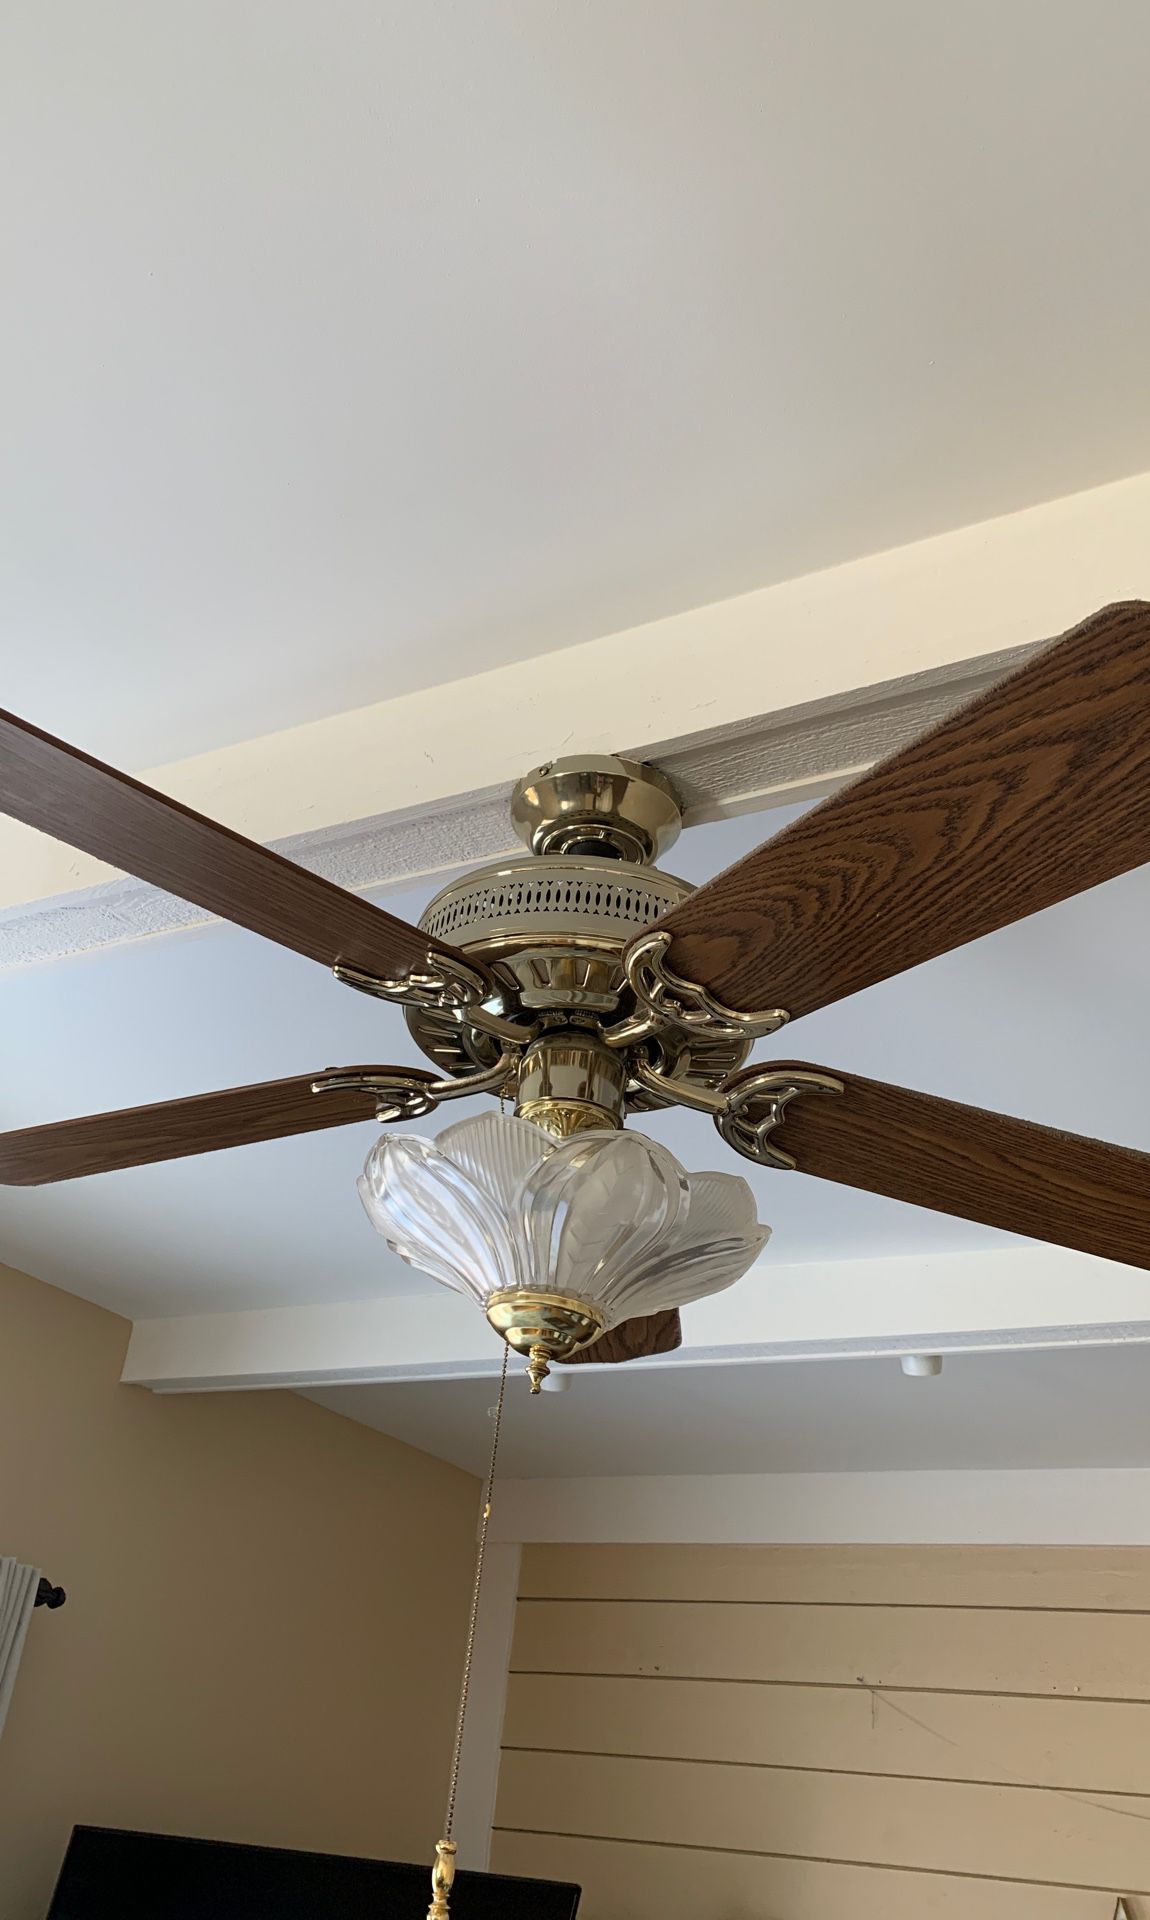 Ceiling fan with light